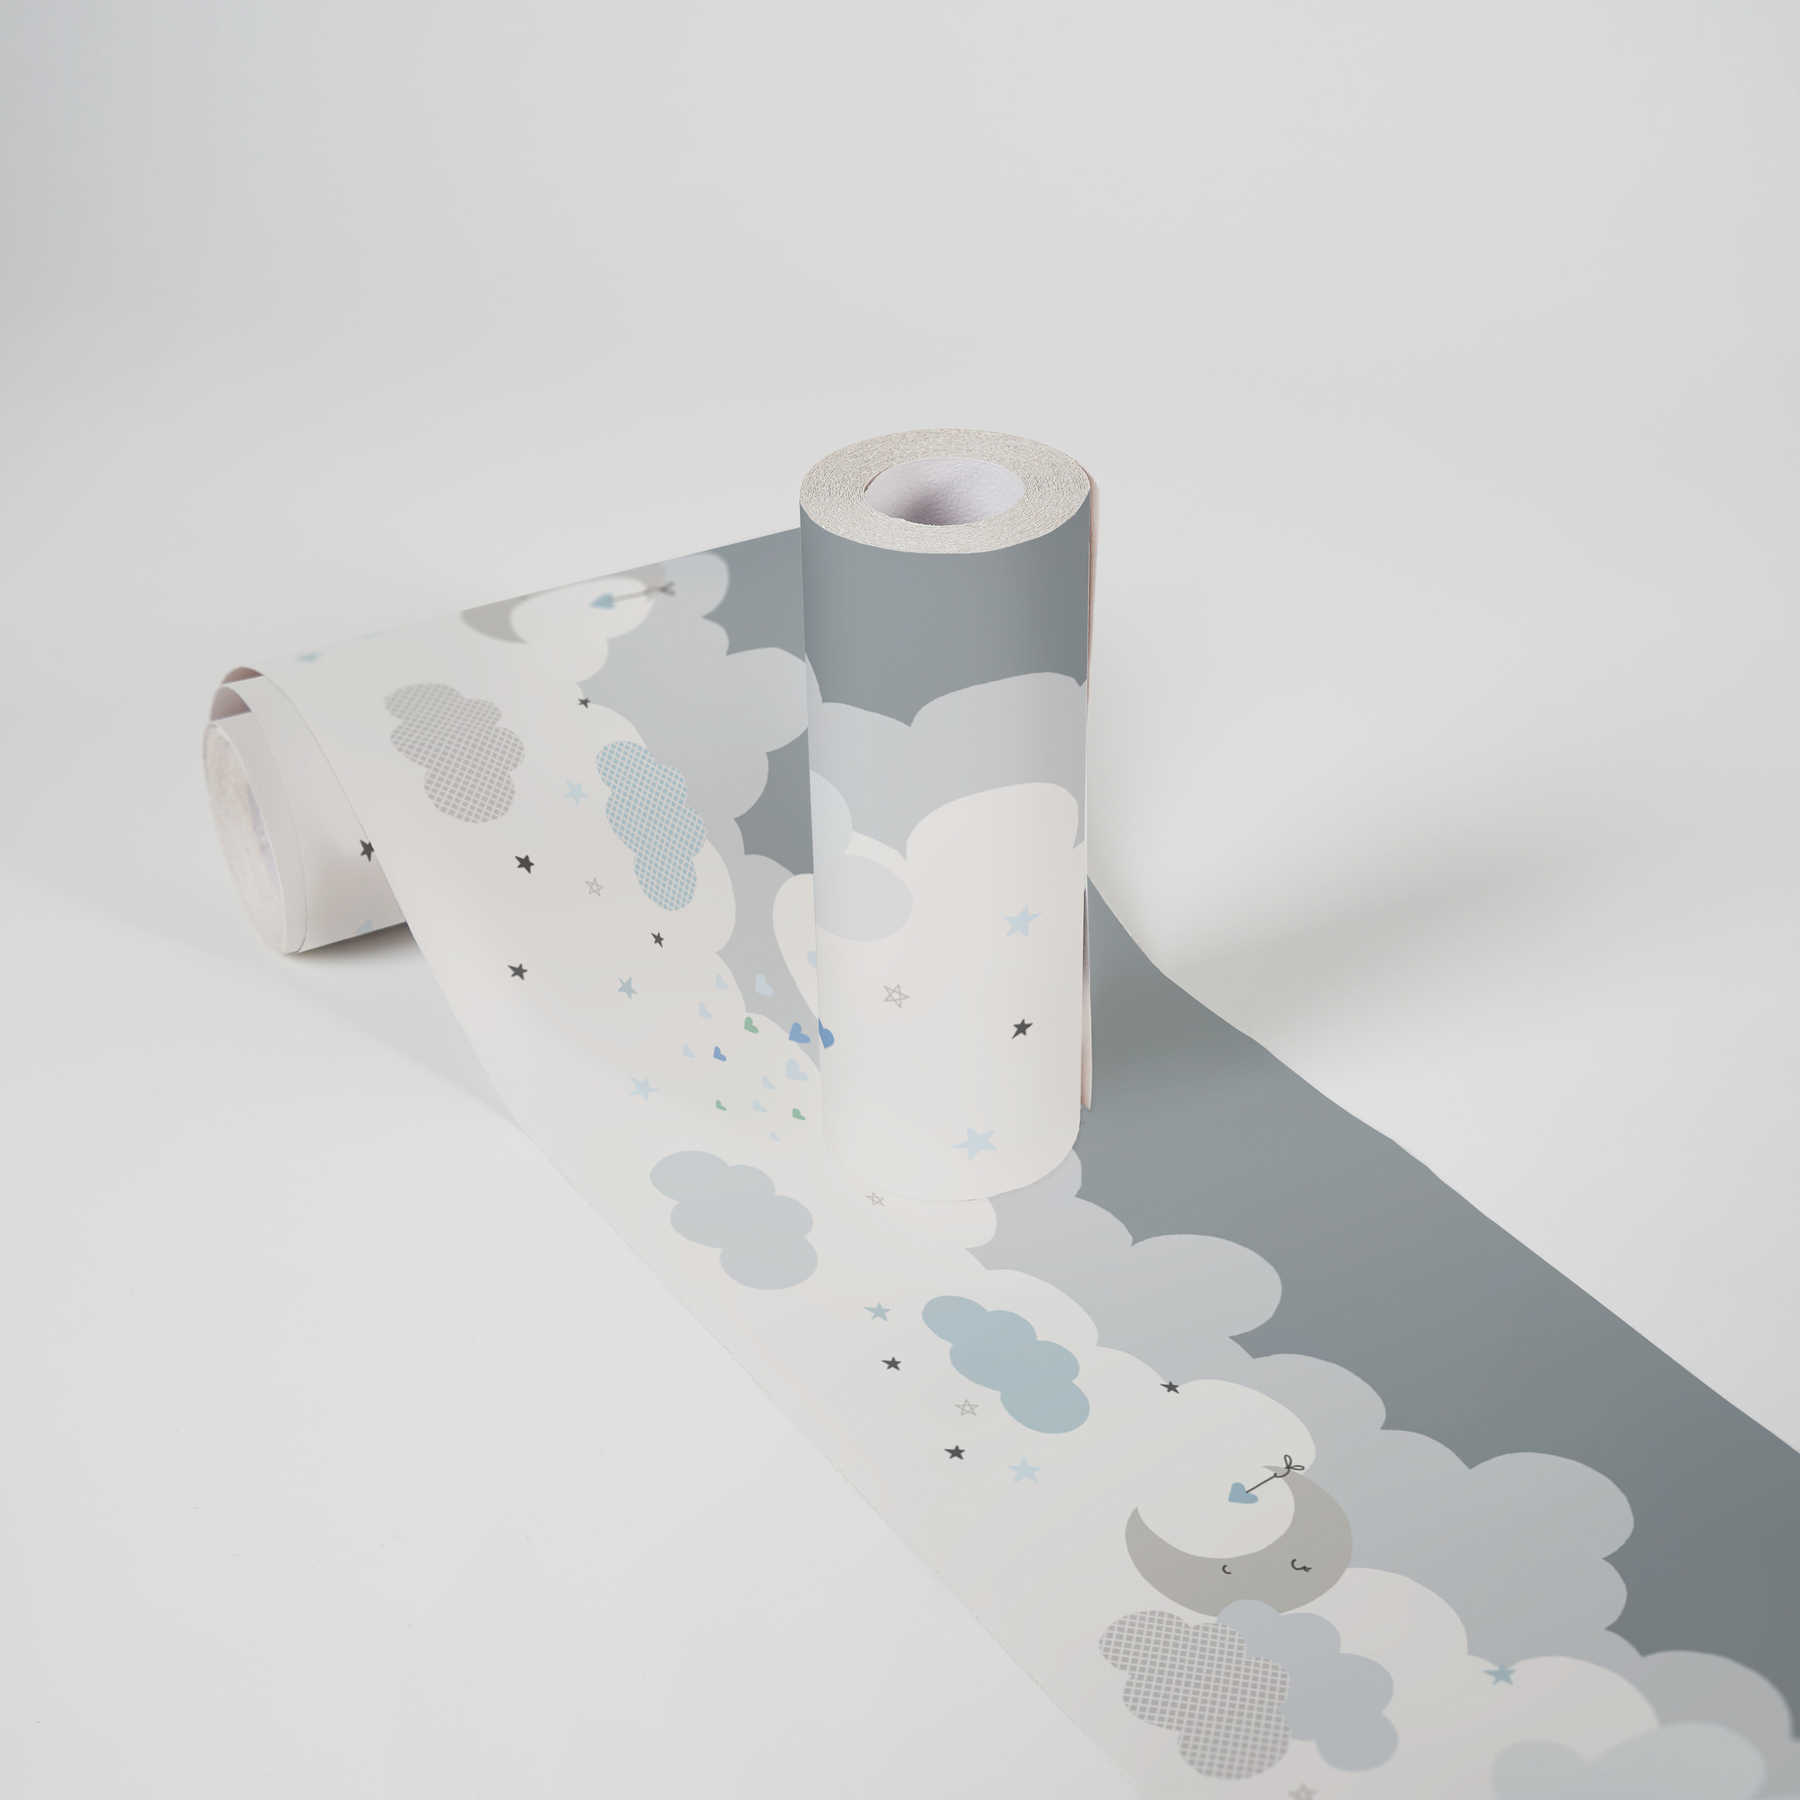             Self-adhesive baby room border "Blue sugar clouds" - blue, grey, white
        